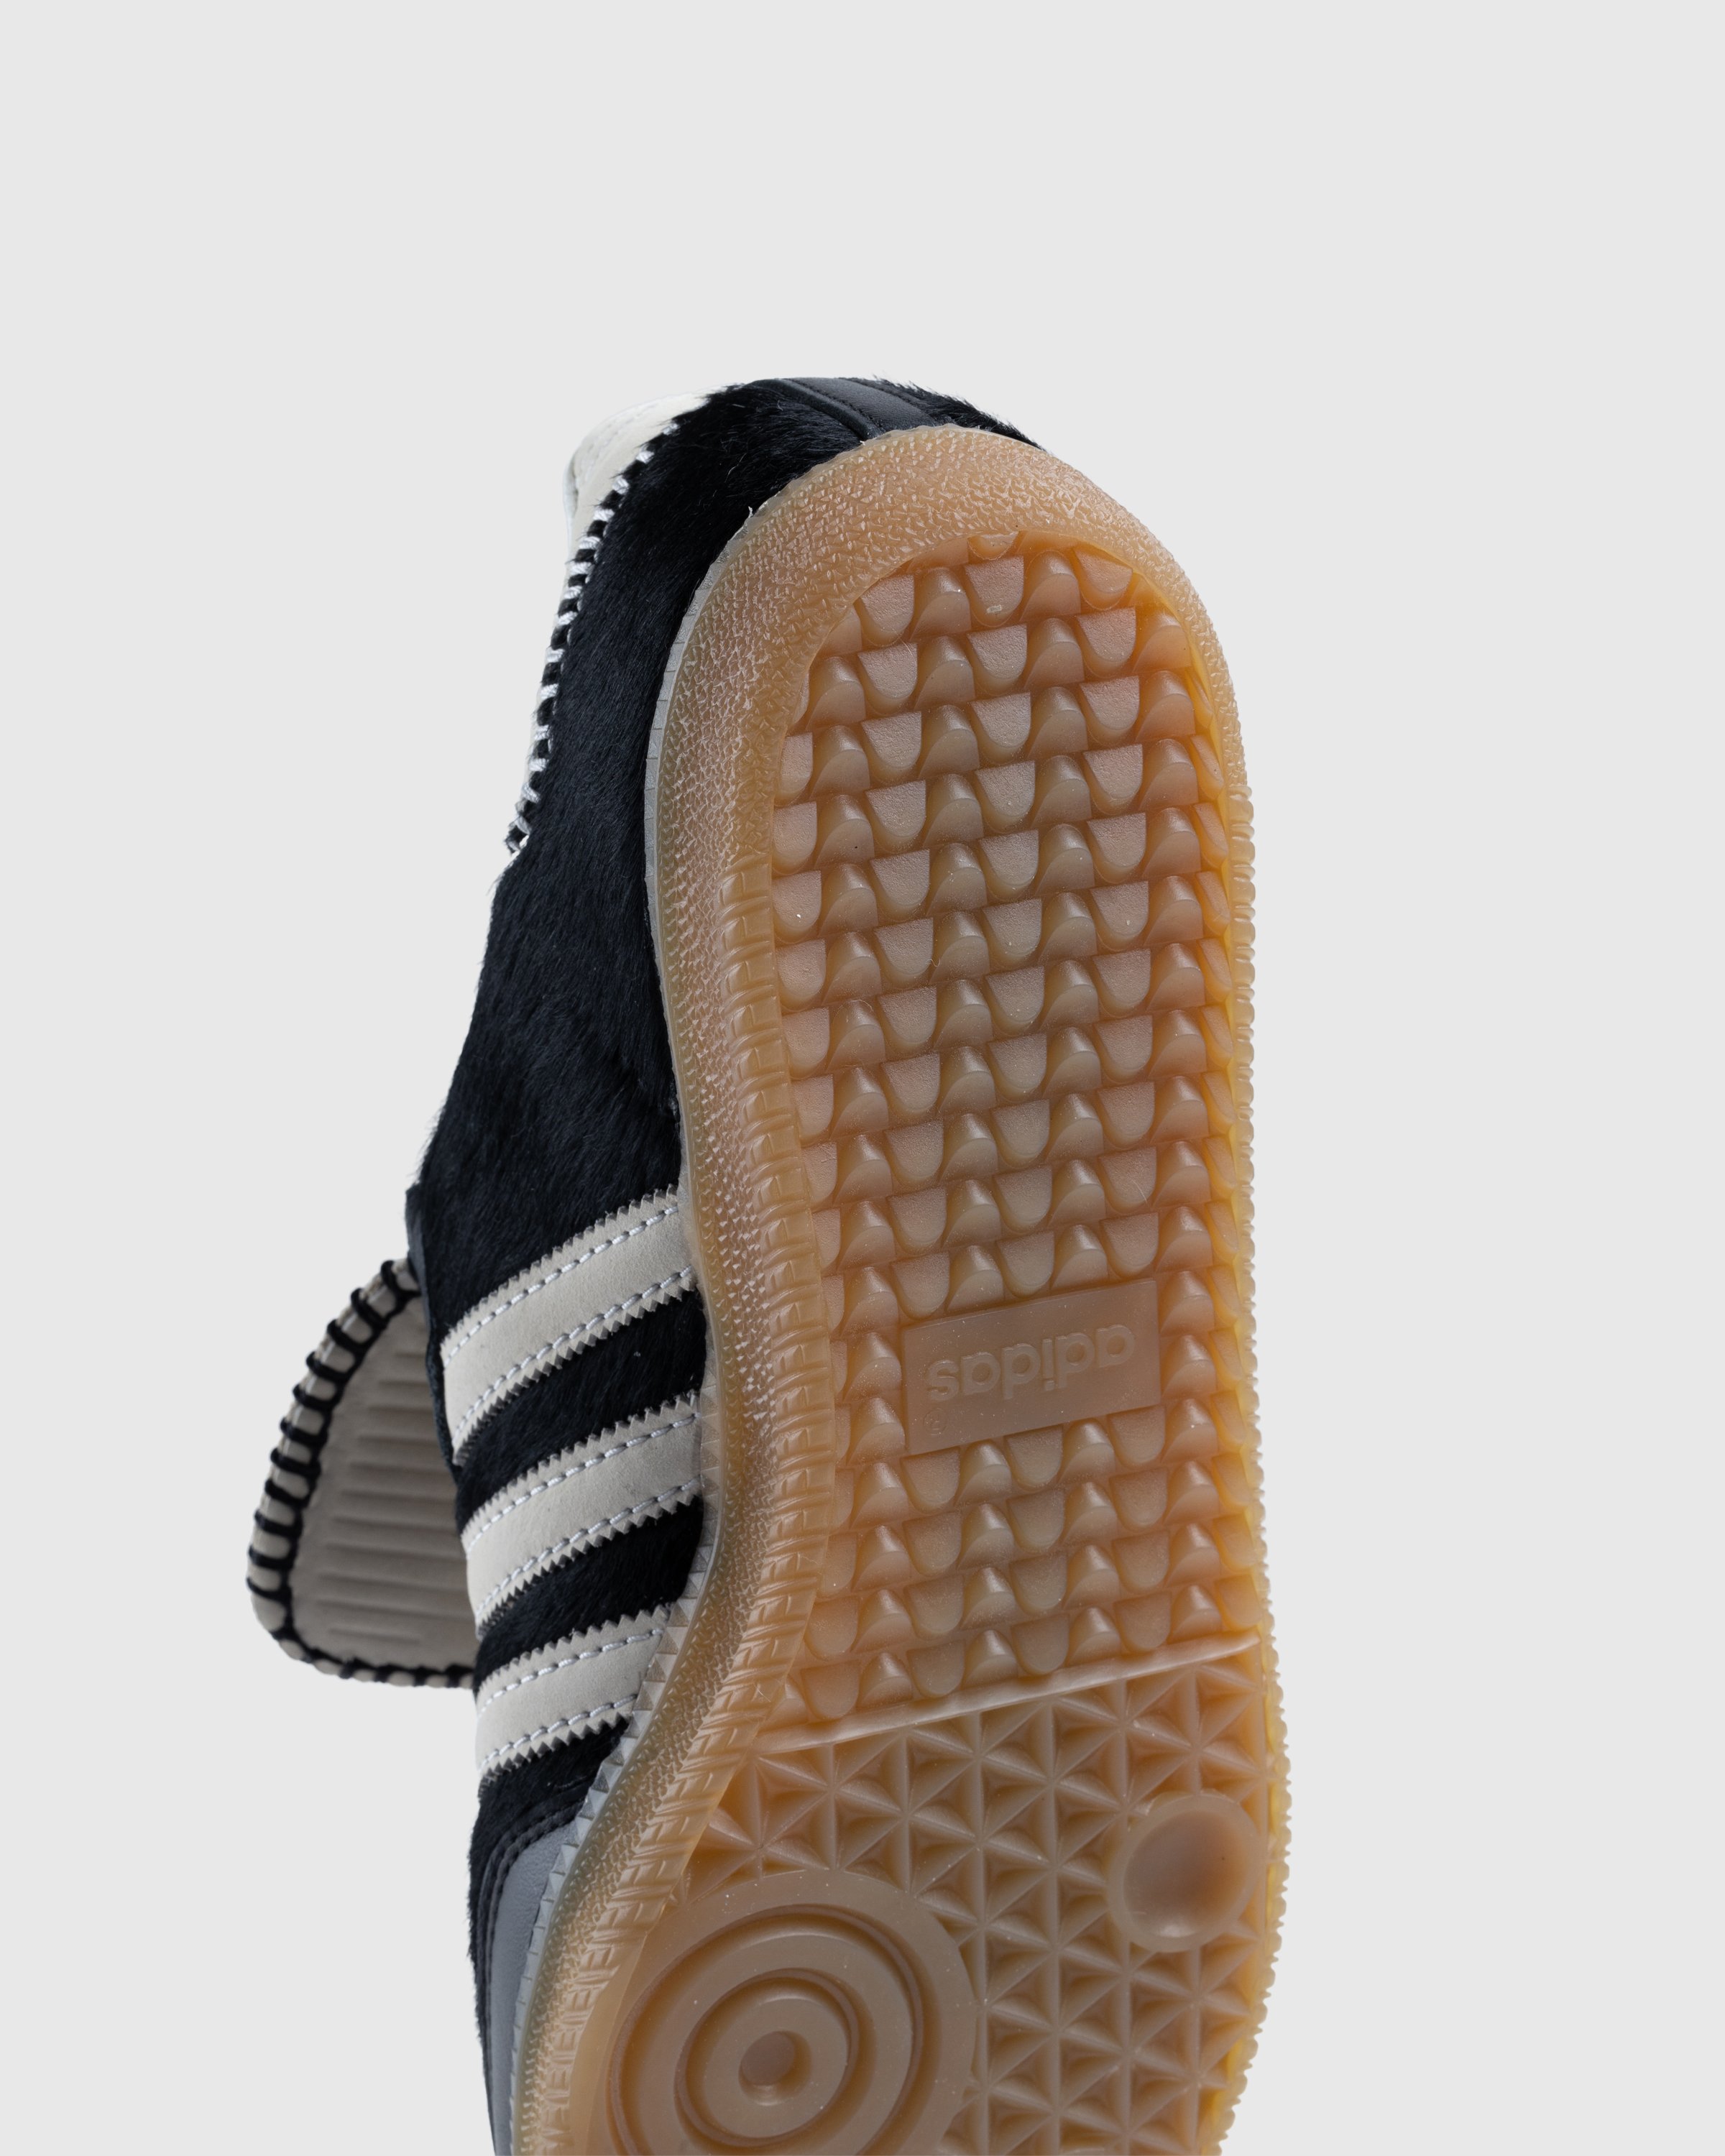 Adidas x Wales Bonner - WB PONY TONAL SAMBA CBLACK/CWHITE/CWHITE - Footwear - Black - Image 6